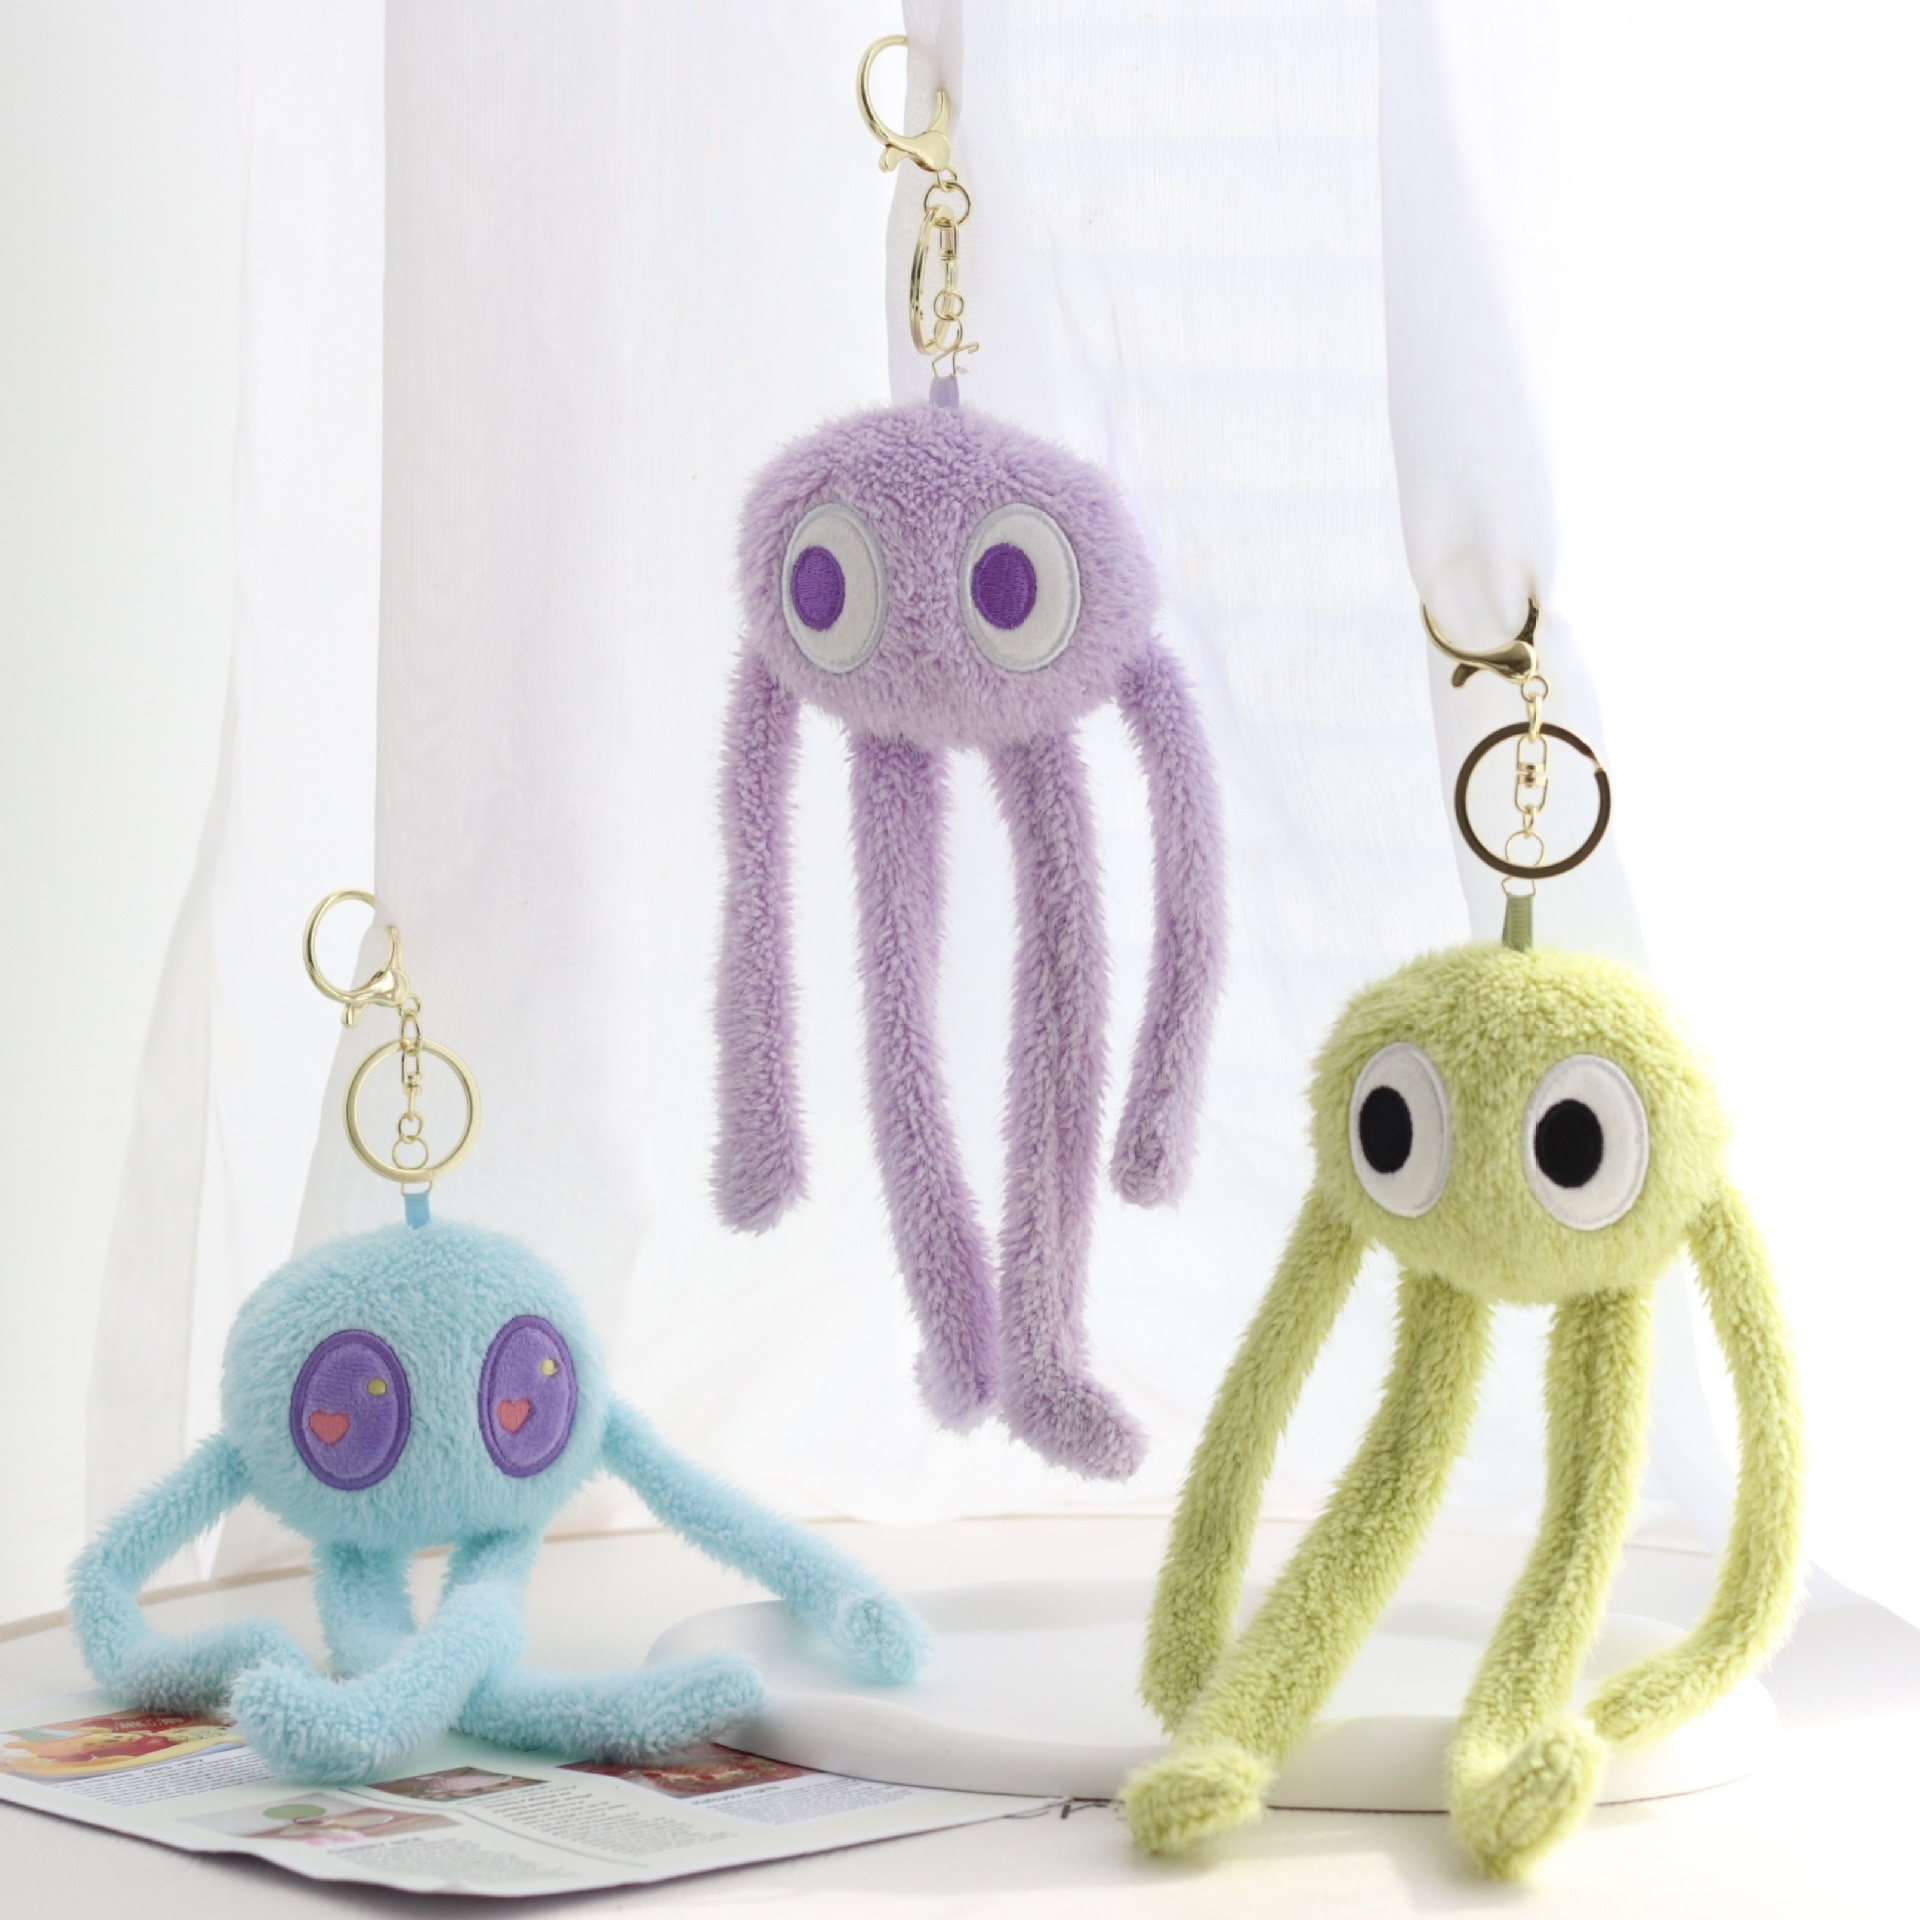 22cm Funny Long Leg Octopus Keychain Plush Stuffed Toy Cute Plush Animal Soft Doll Pendant for 5